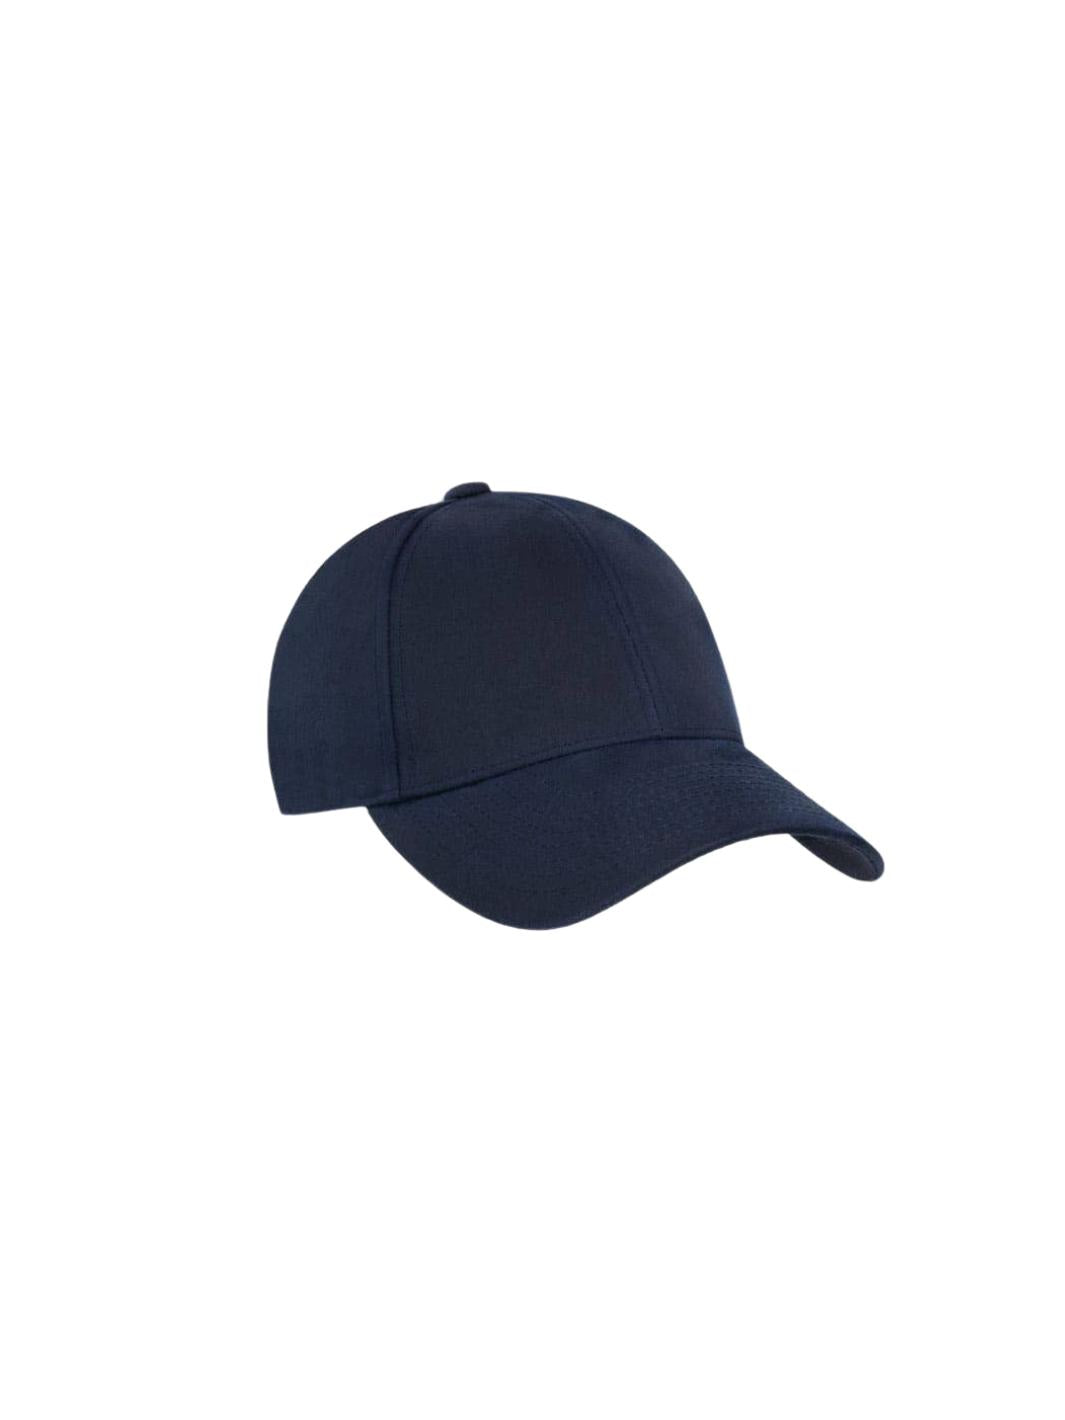 Varsity Headwear Accessories Cap | Navy Oilskin